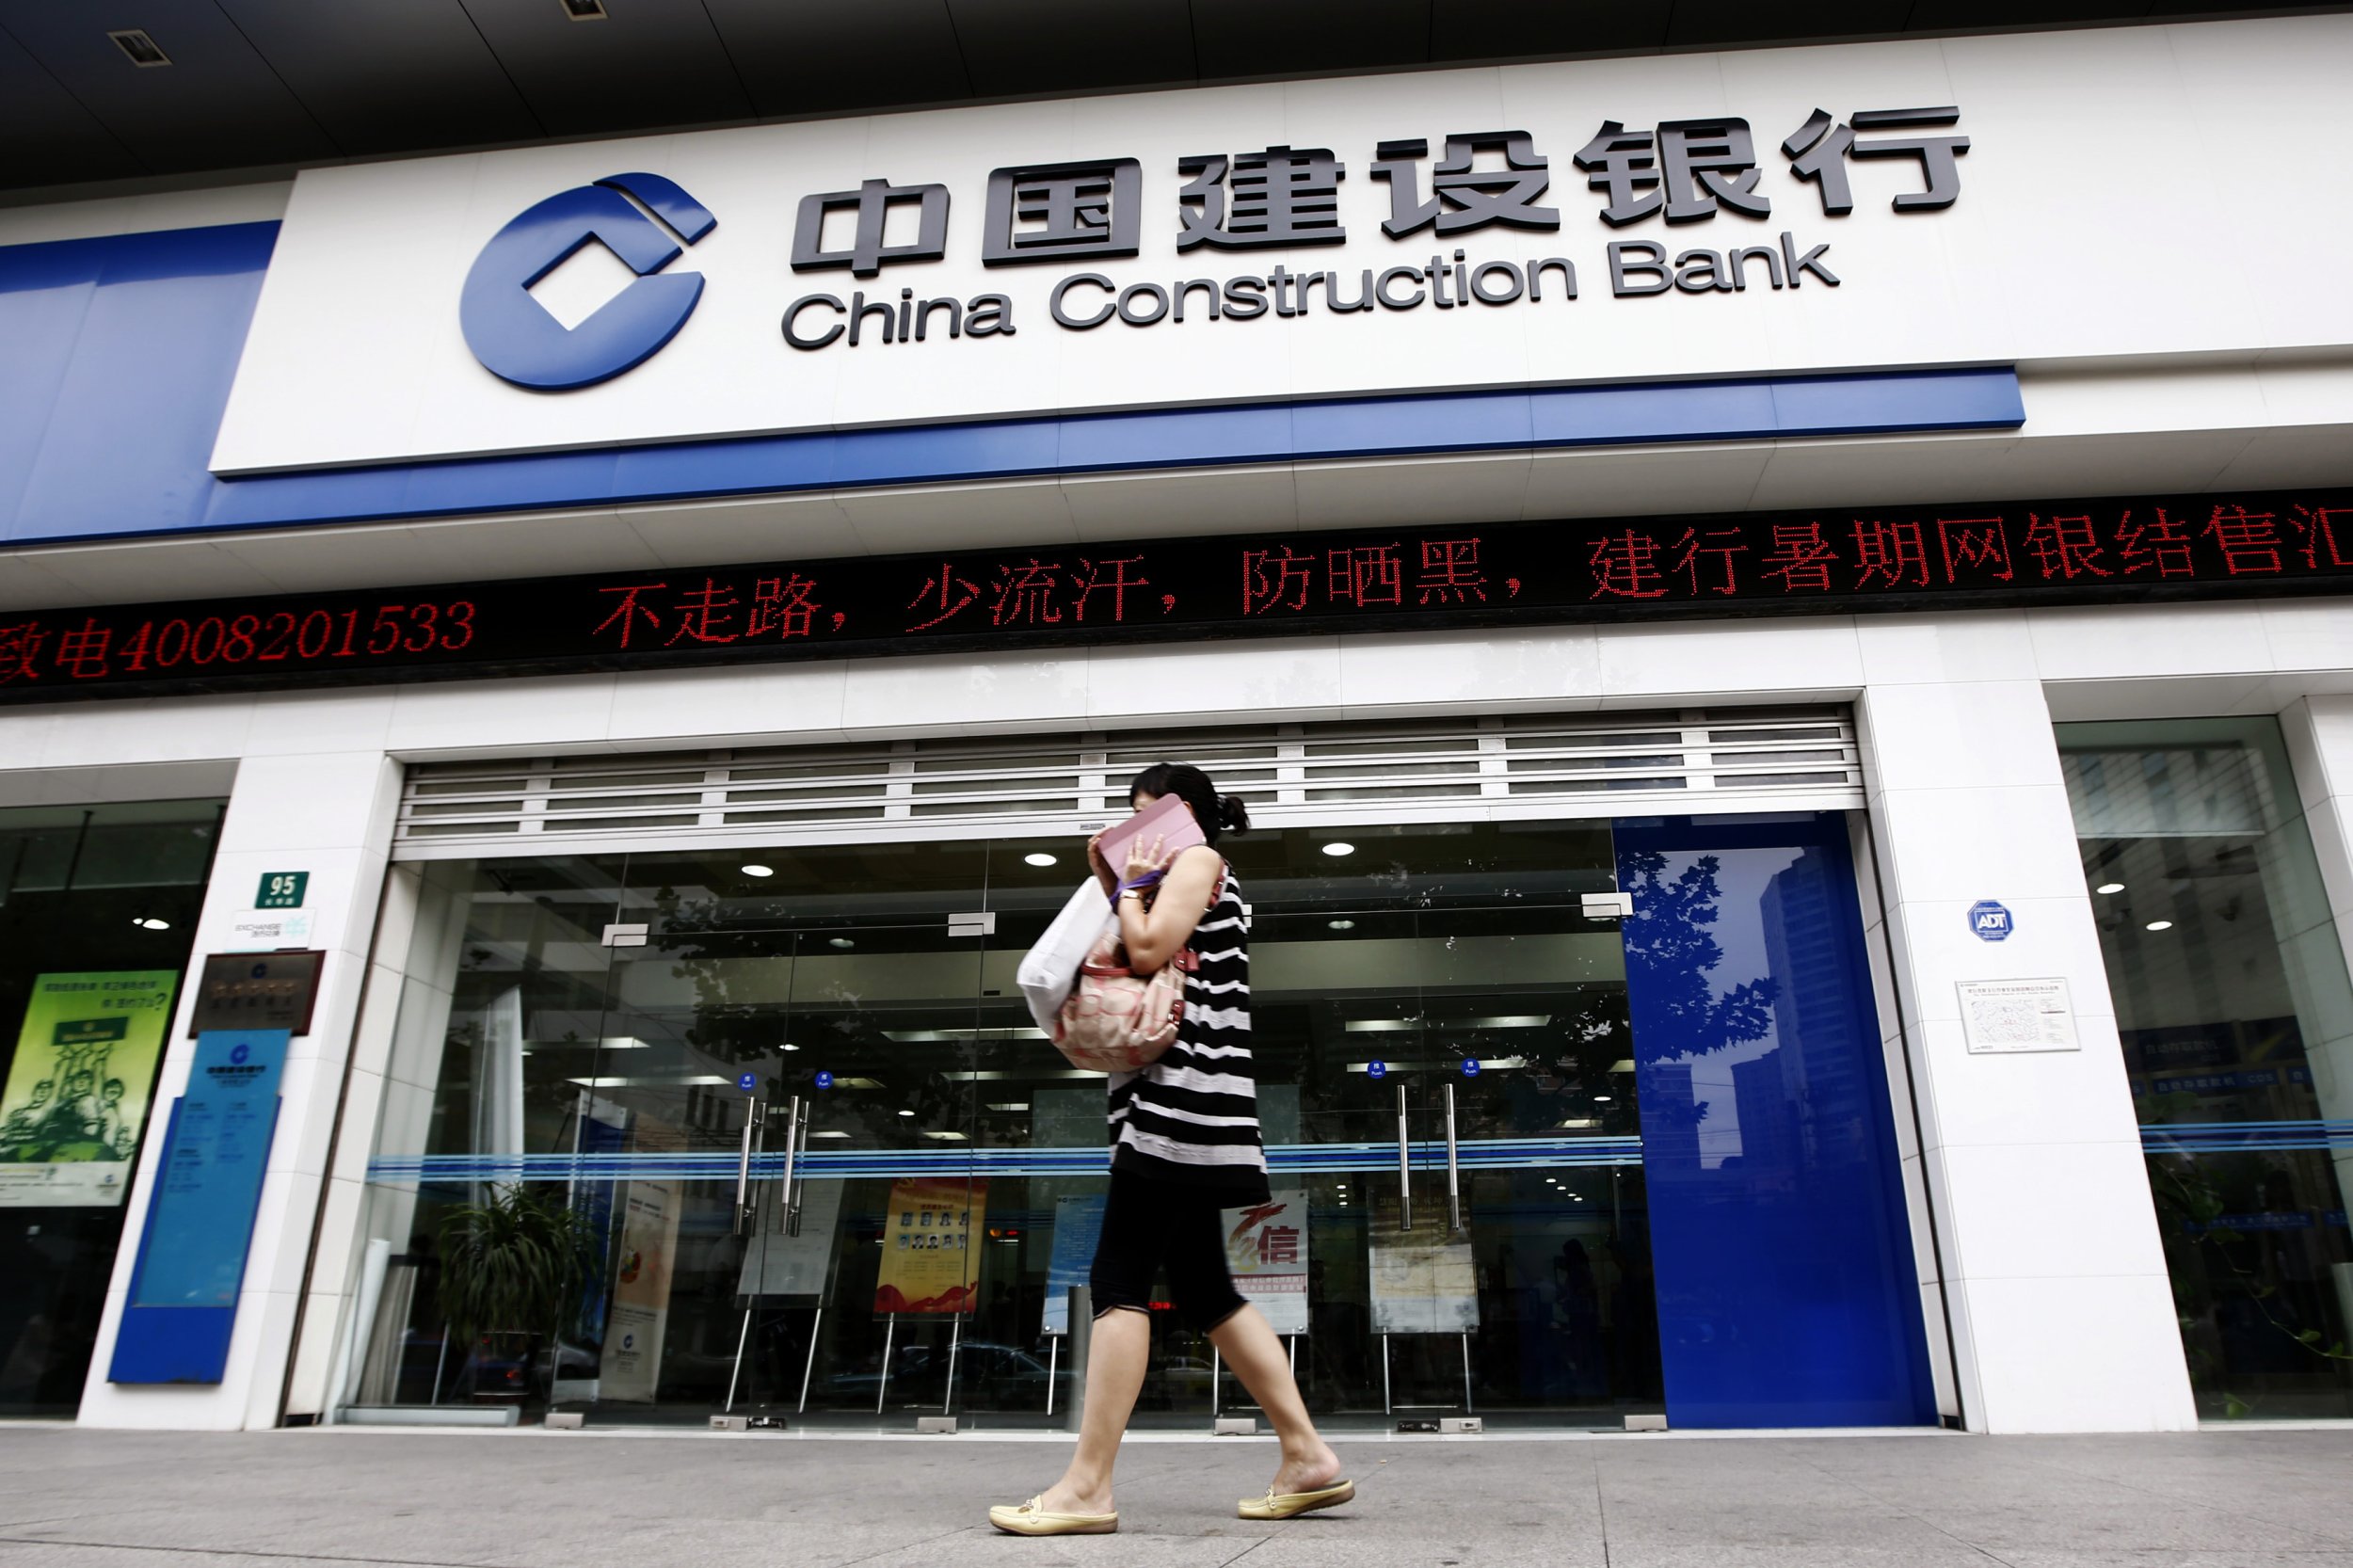 Construction bank of china. China Construction Bank (Китай). Строительный банк Китая China Construction Bank CCB. Китайские банки. Chinatown банк Китая.